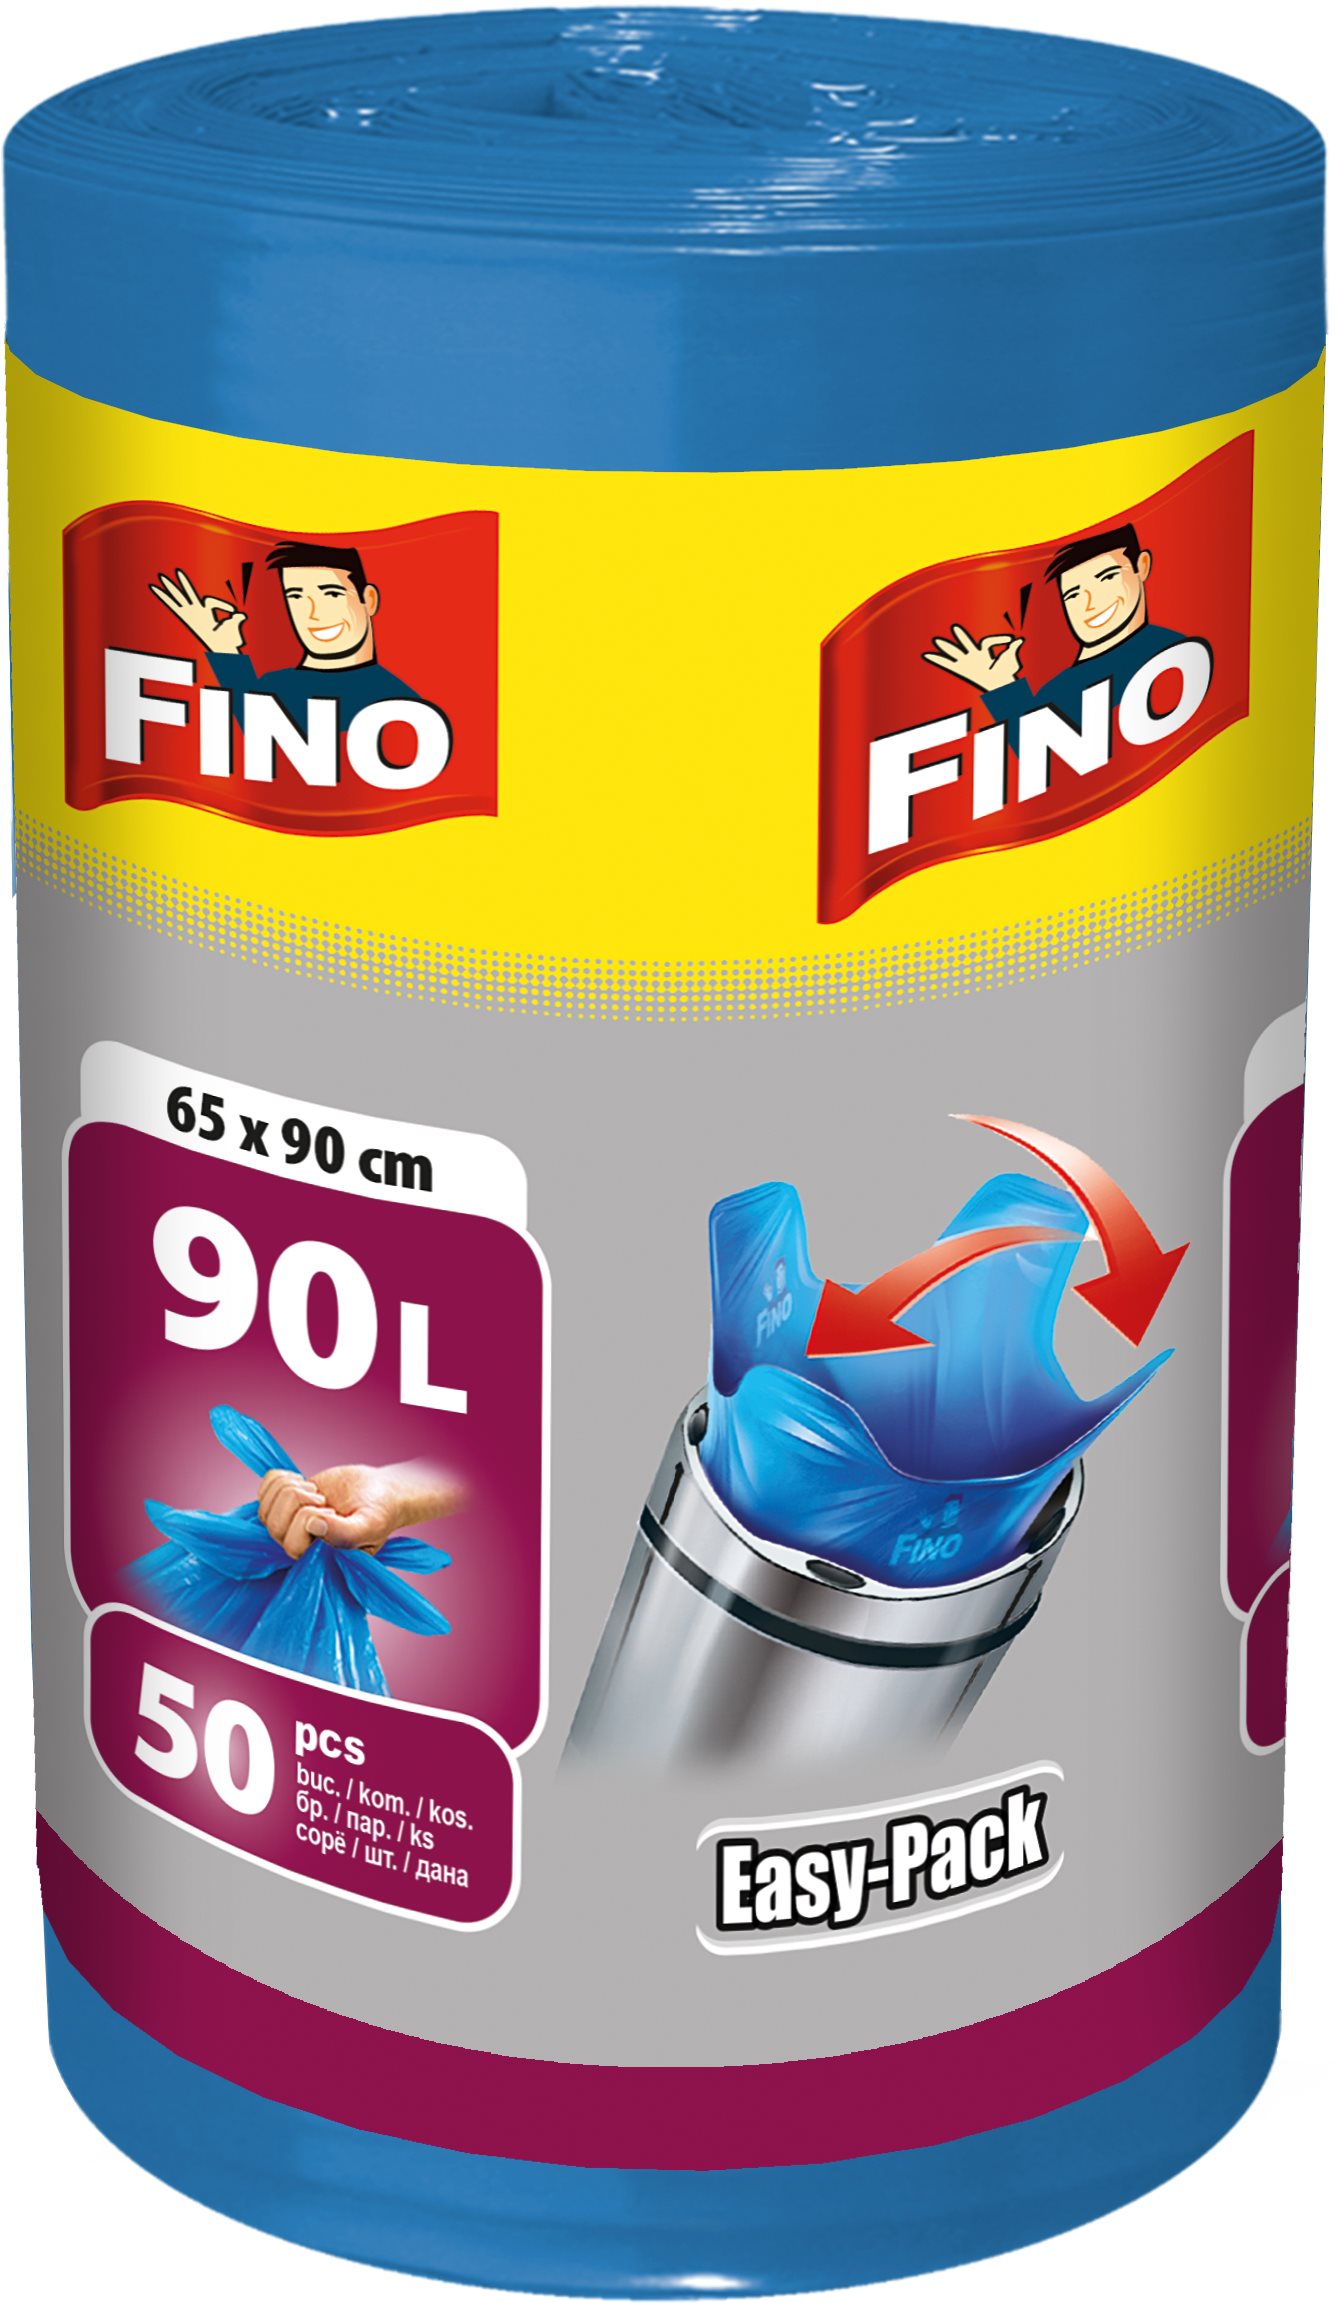 FINO Easy pack 90 l, 50 db